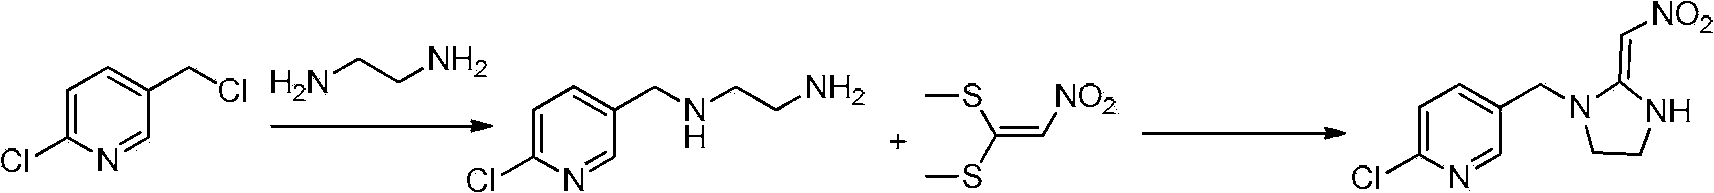 Synthesis process of 2-chlorin-5-((2-(nitryl methylene) imidazoline-1-yl) methyl) pyridine